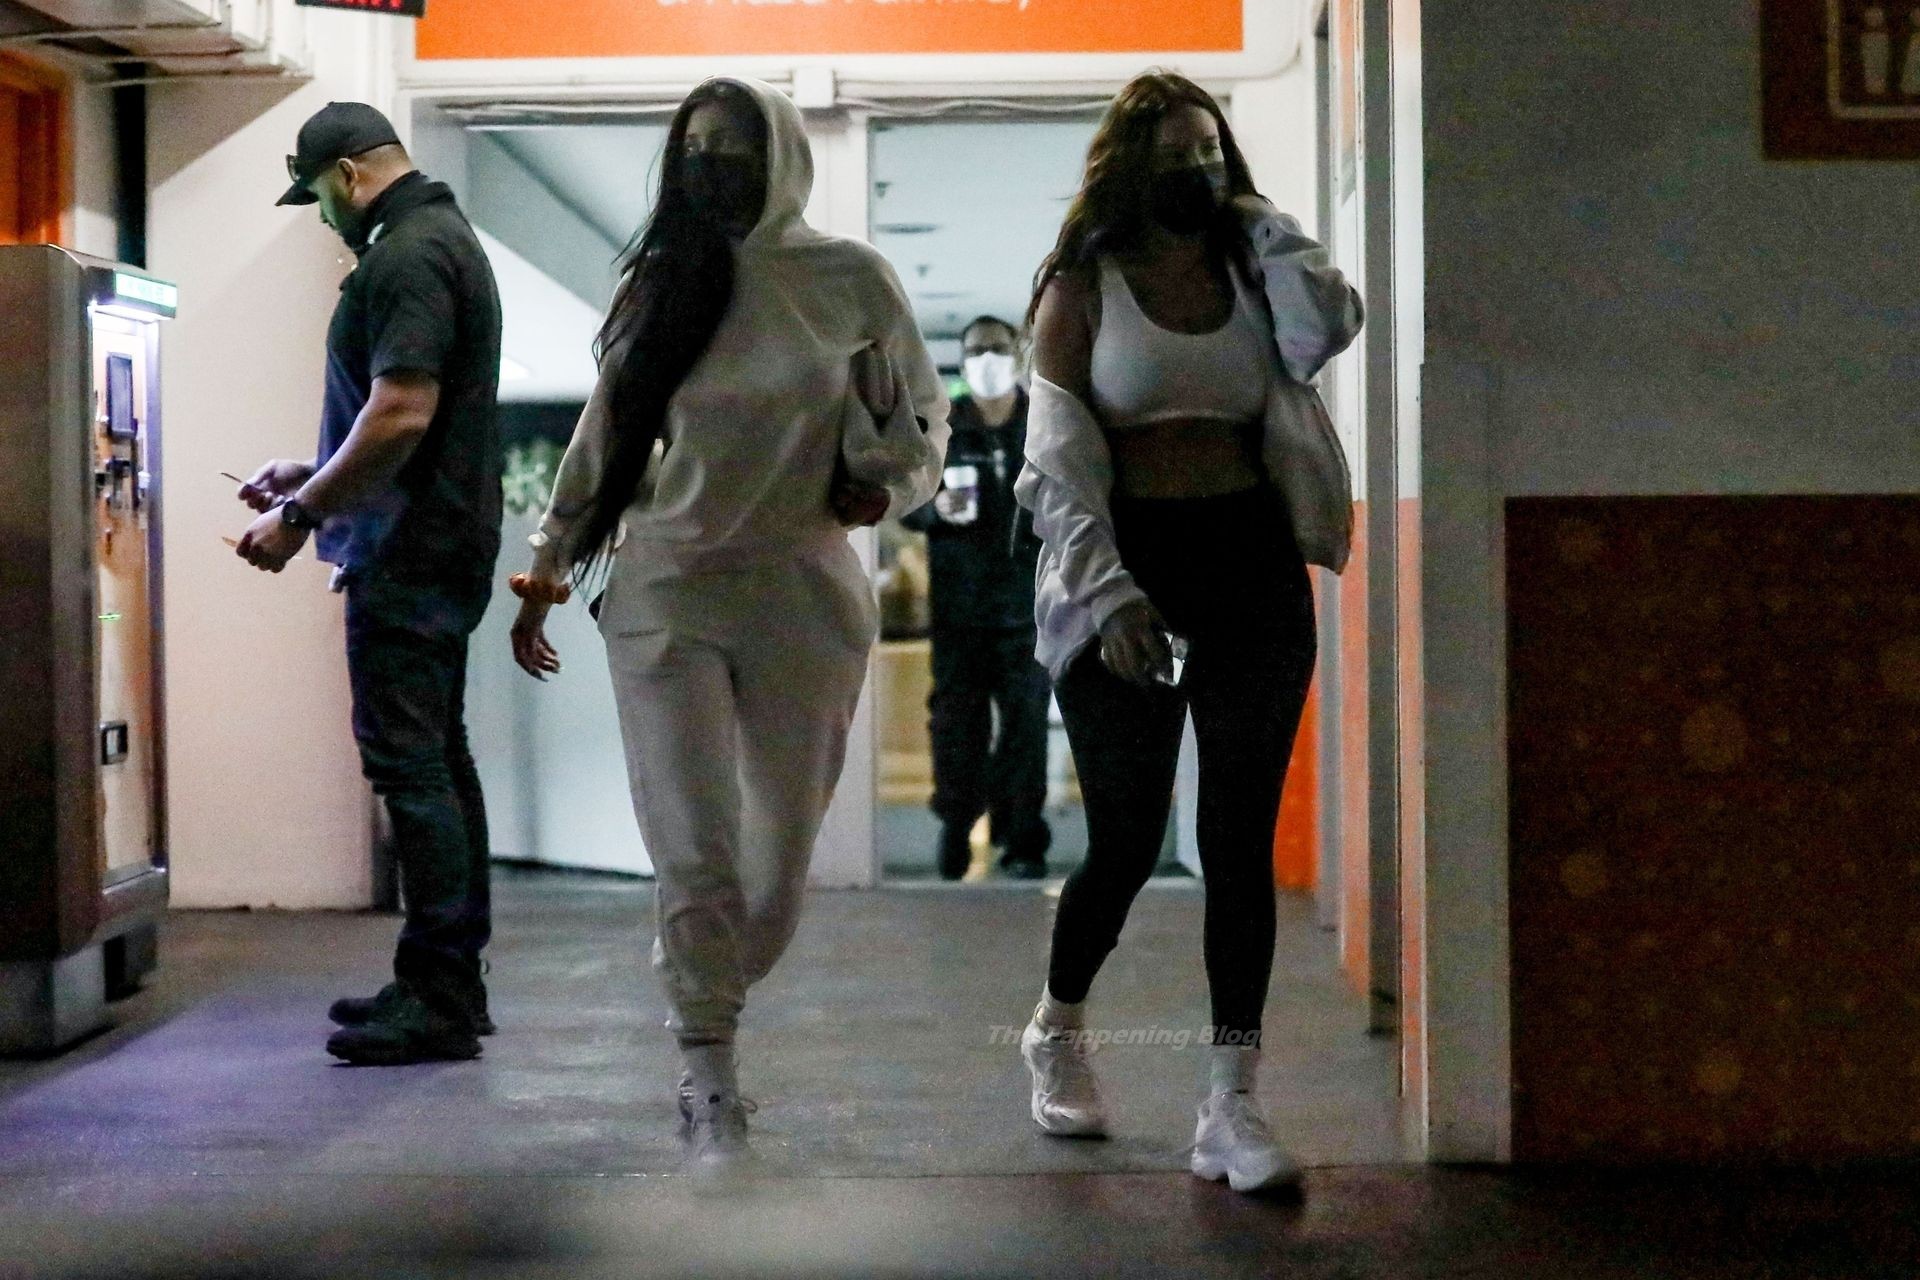 Kylie Jenner & Anastasia Karanikolaou are Seen Leaving a Skincare Clinic (33 Photos)